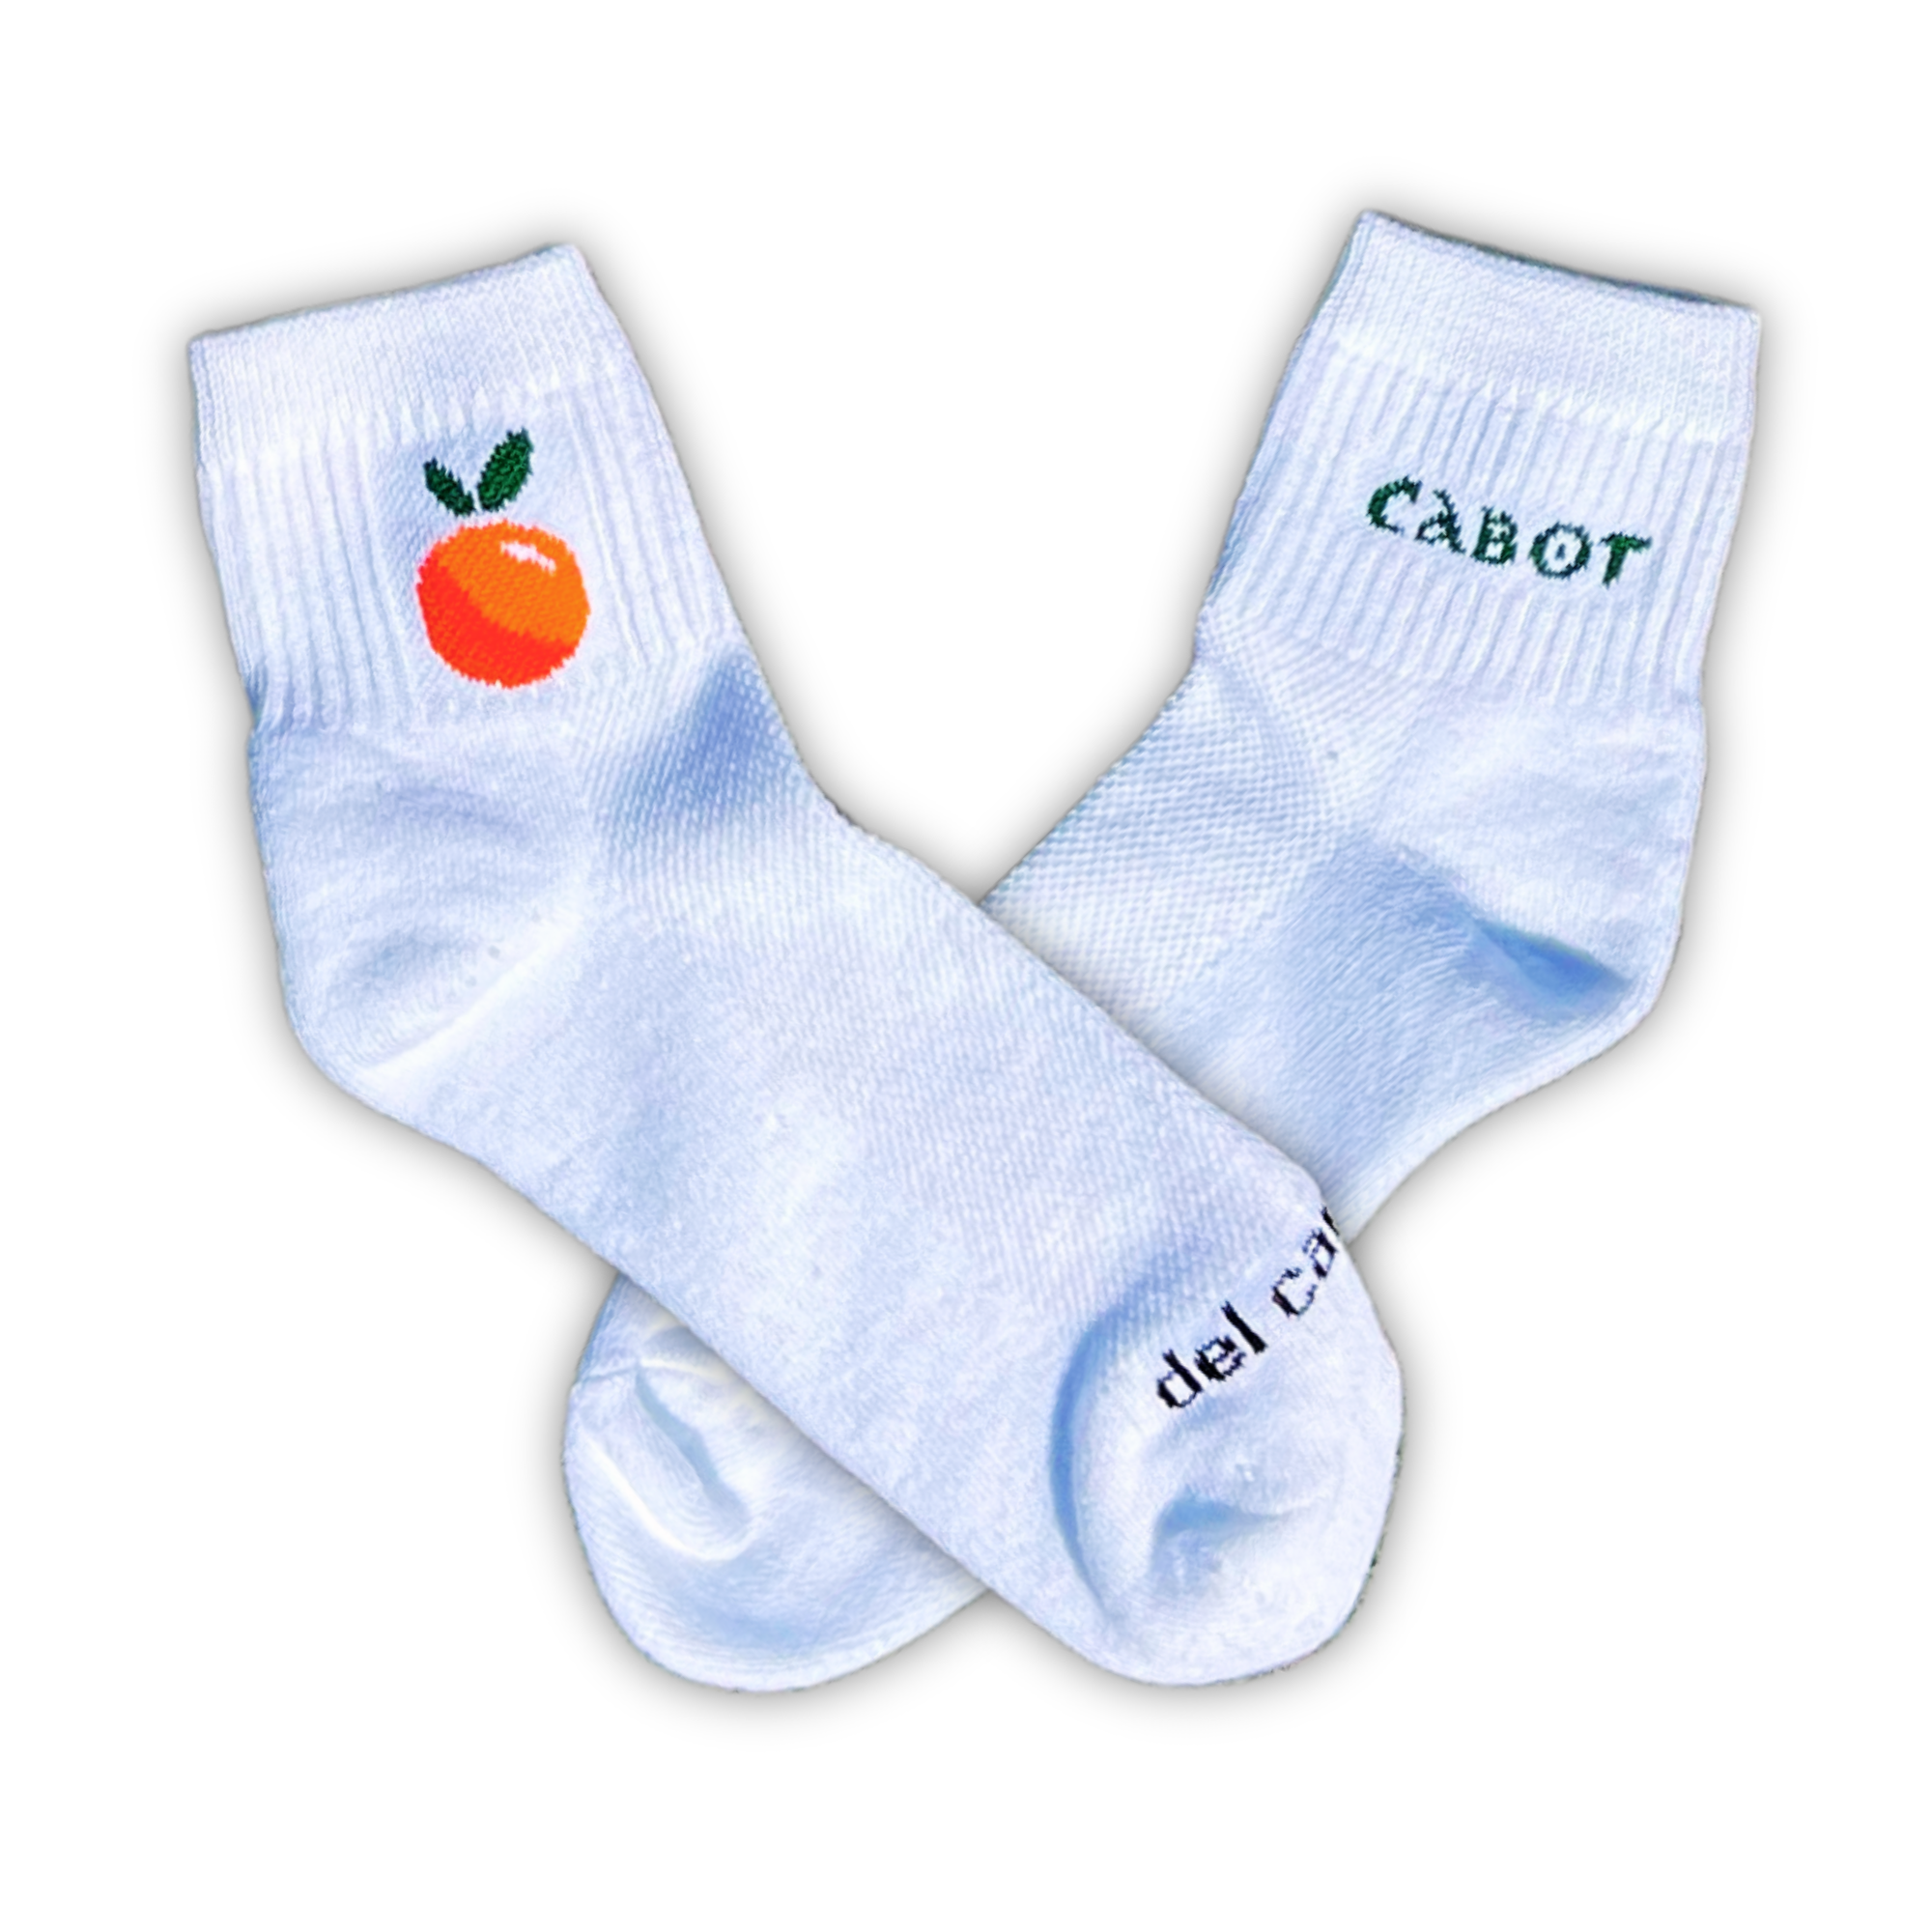 Cabot Socks